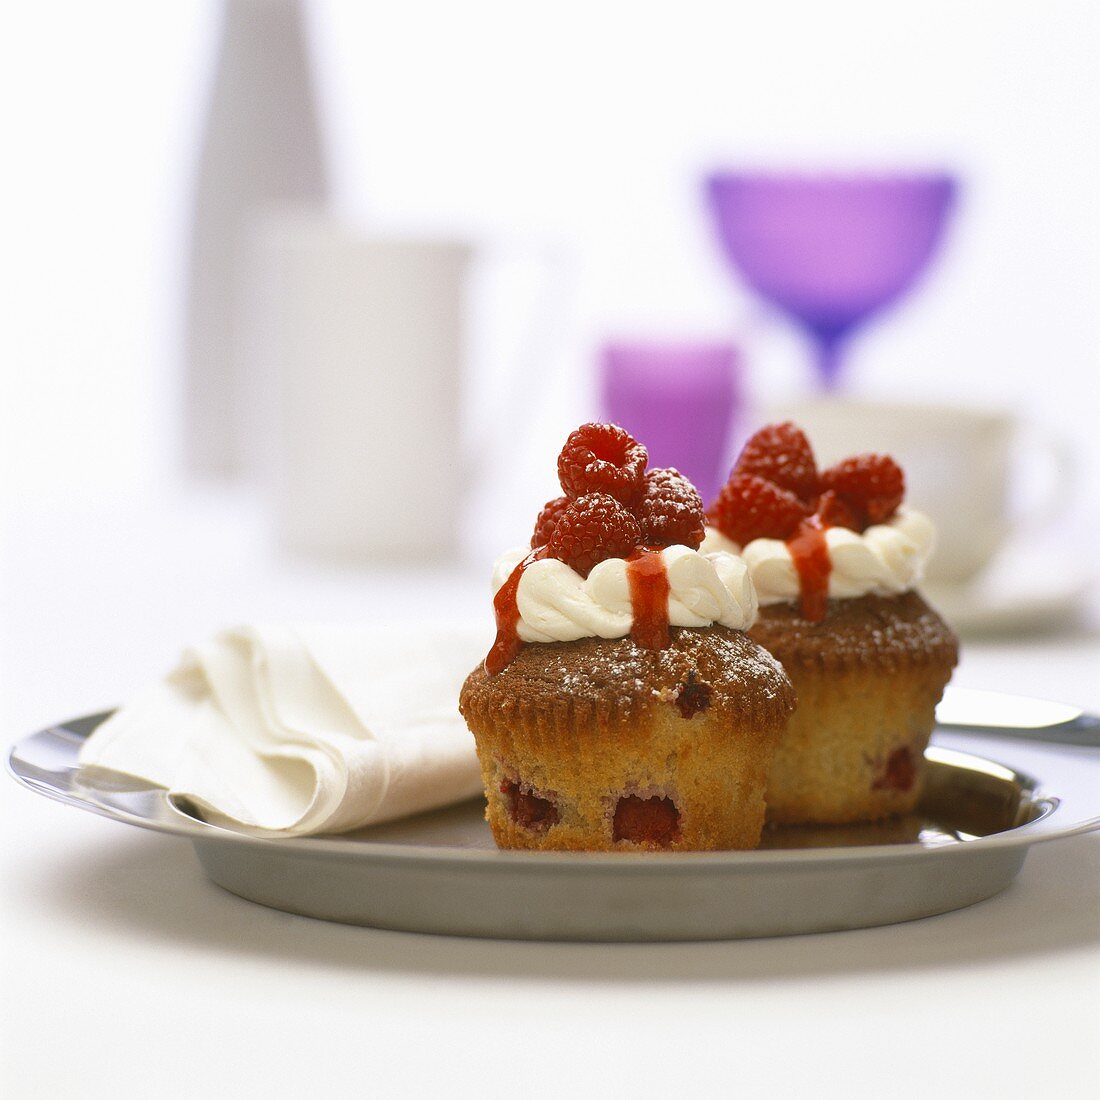 Raspberry muffins with vanilla cream